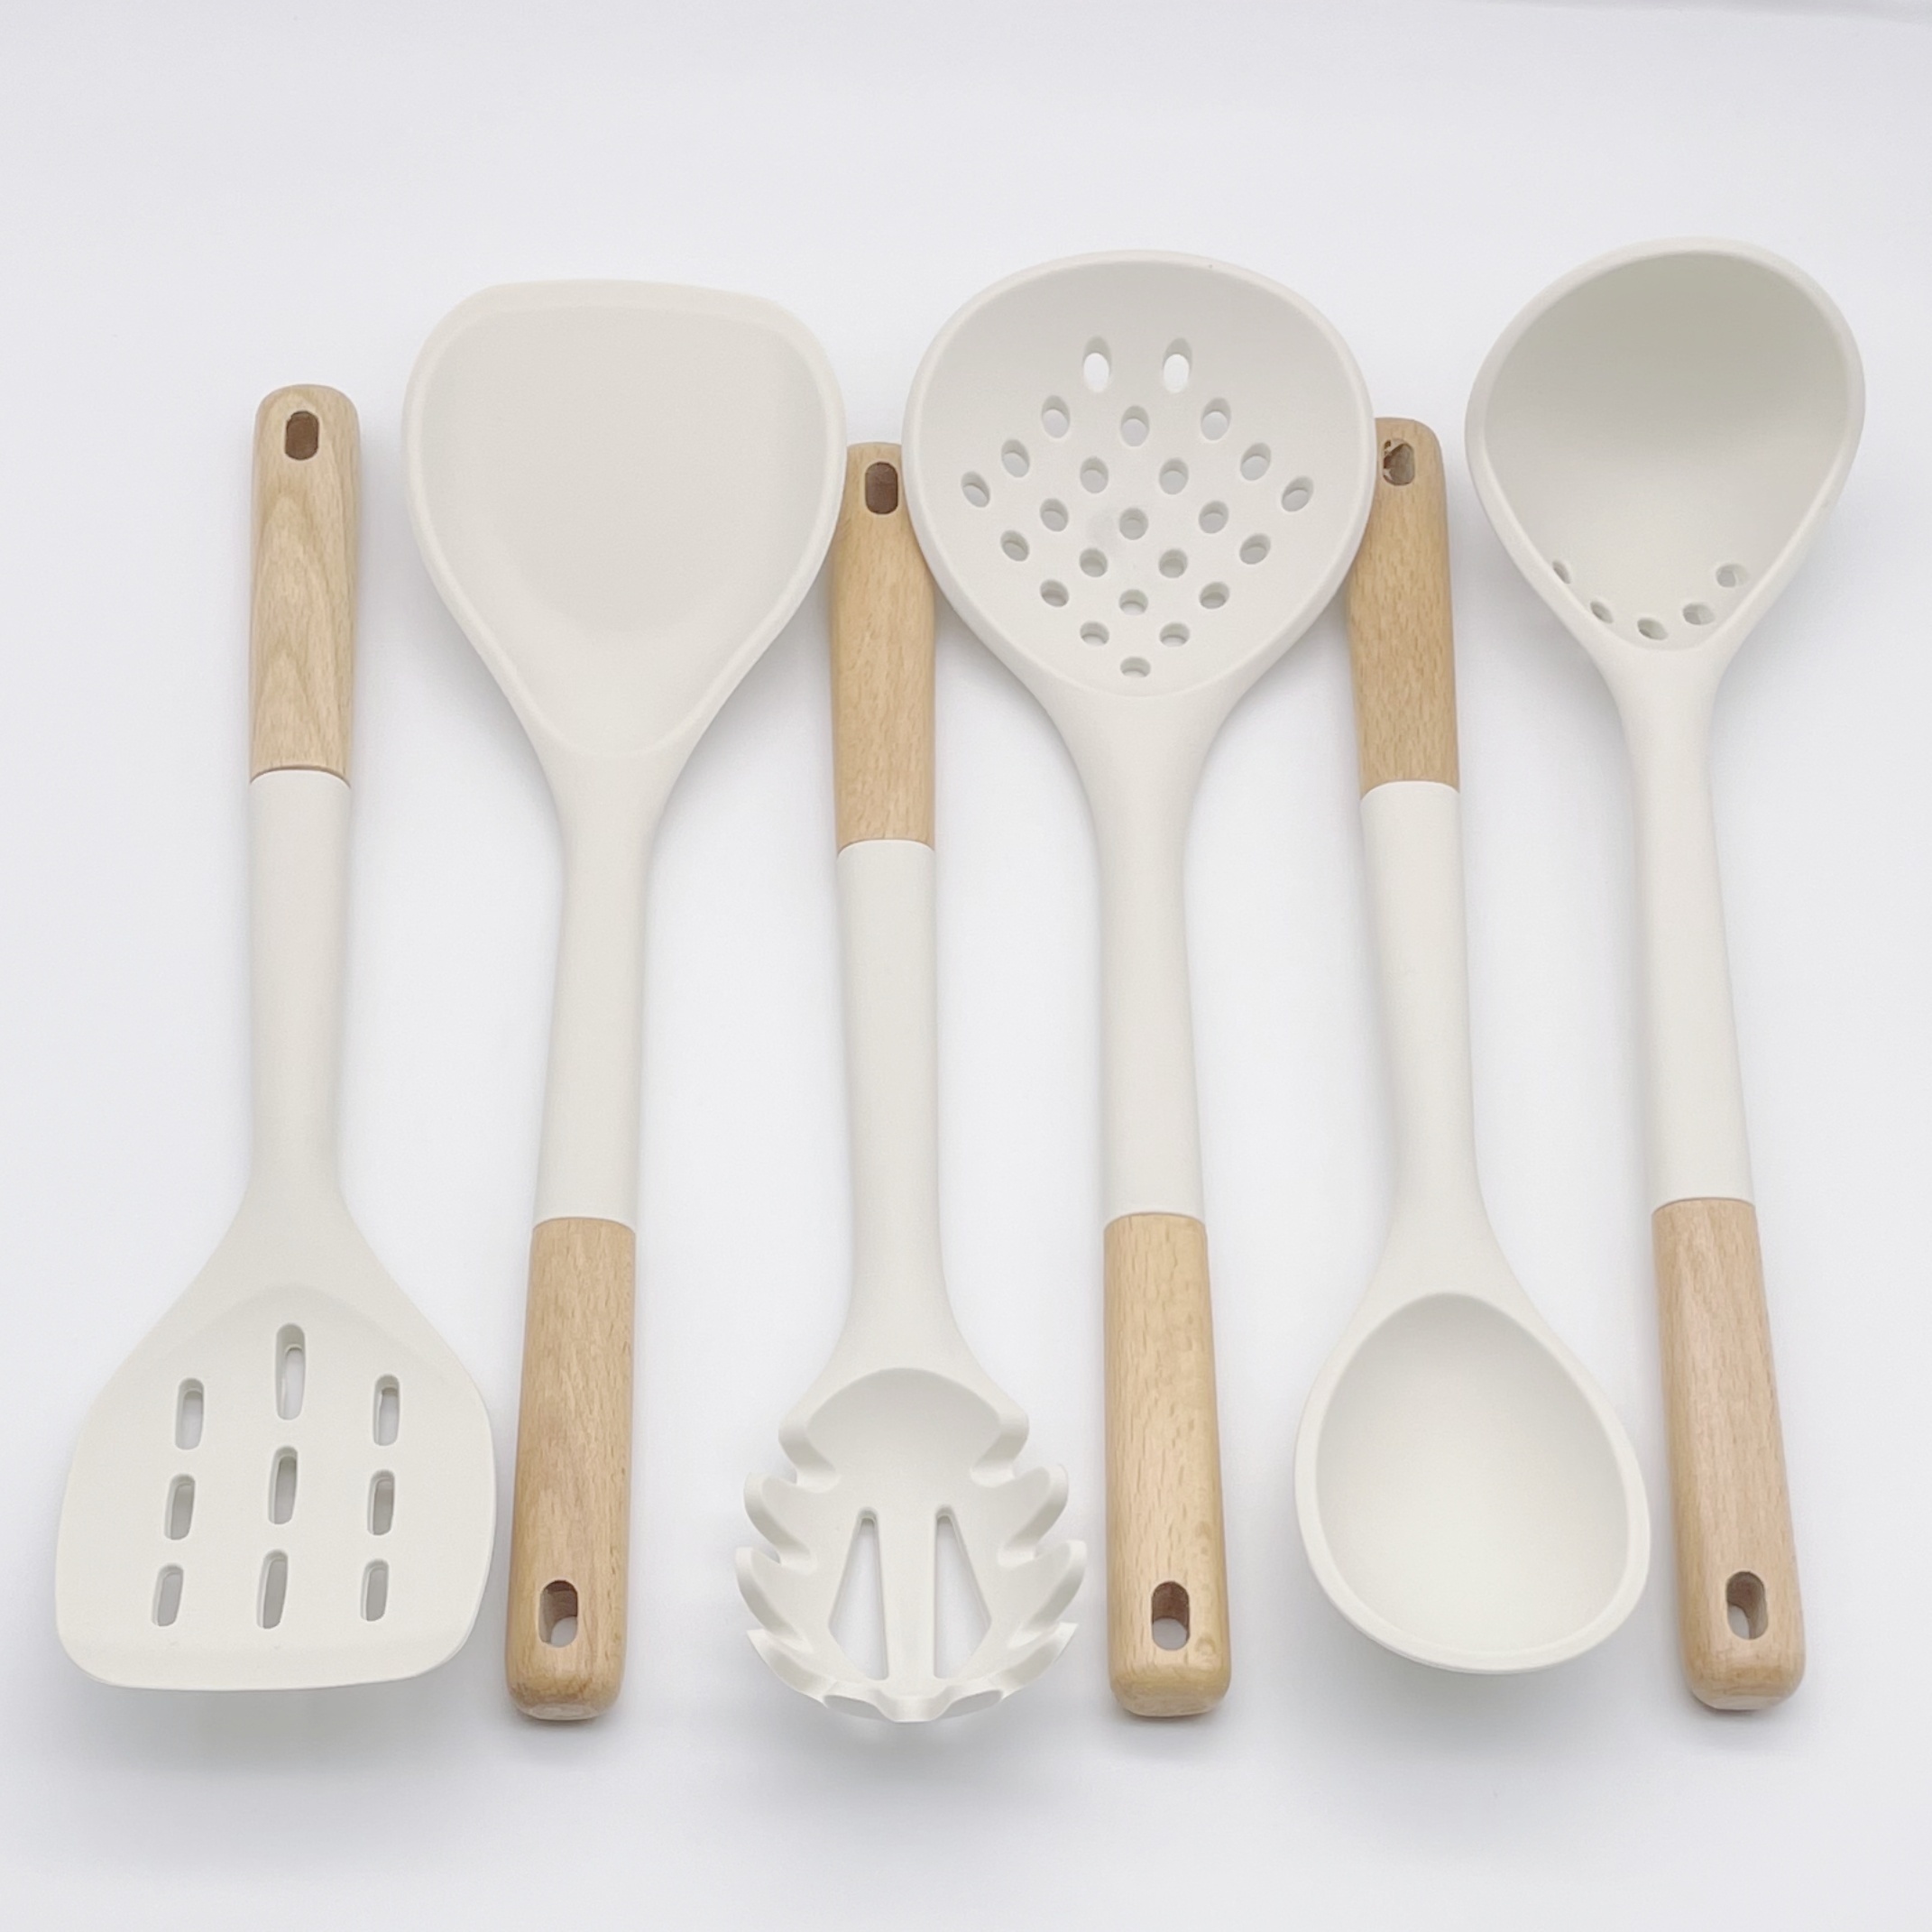 New Milk White Wood Handle Silicone Kitchenware Set of 10 Pieces